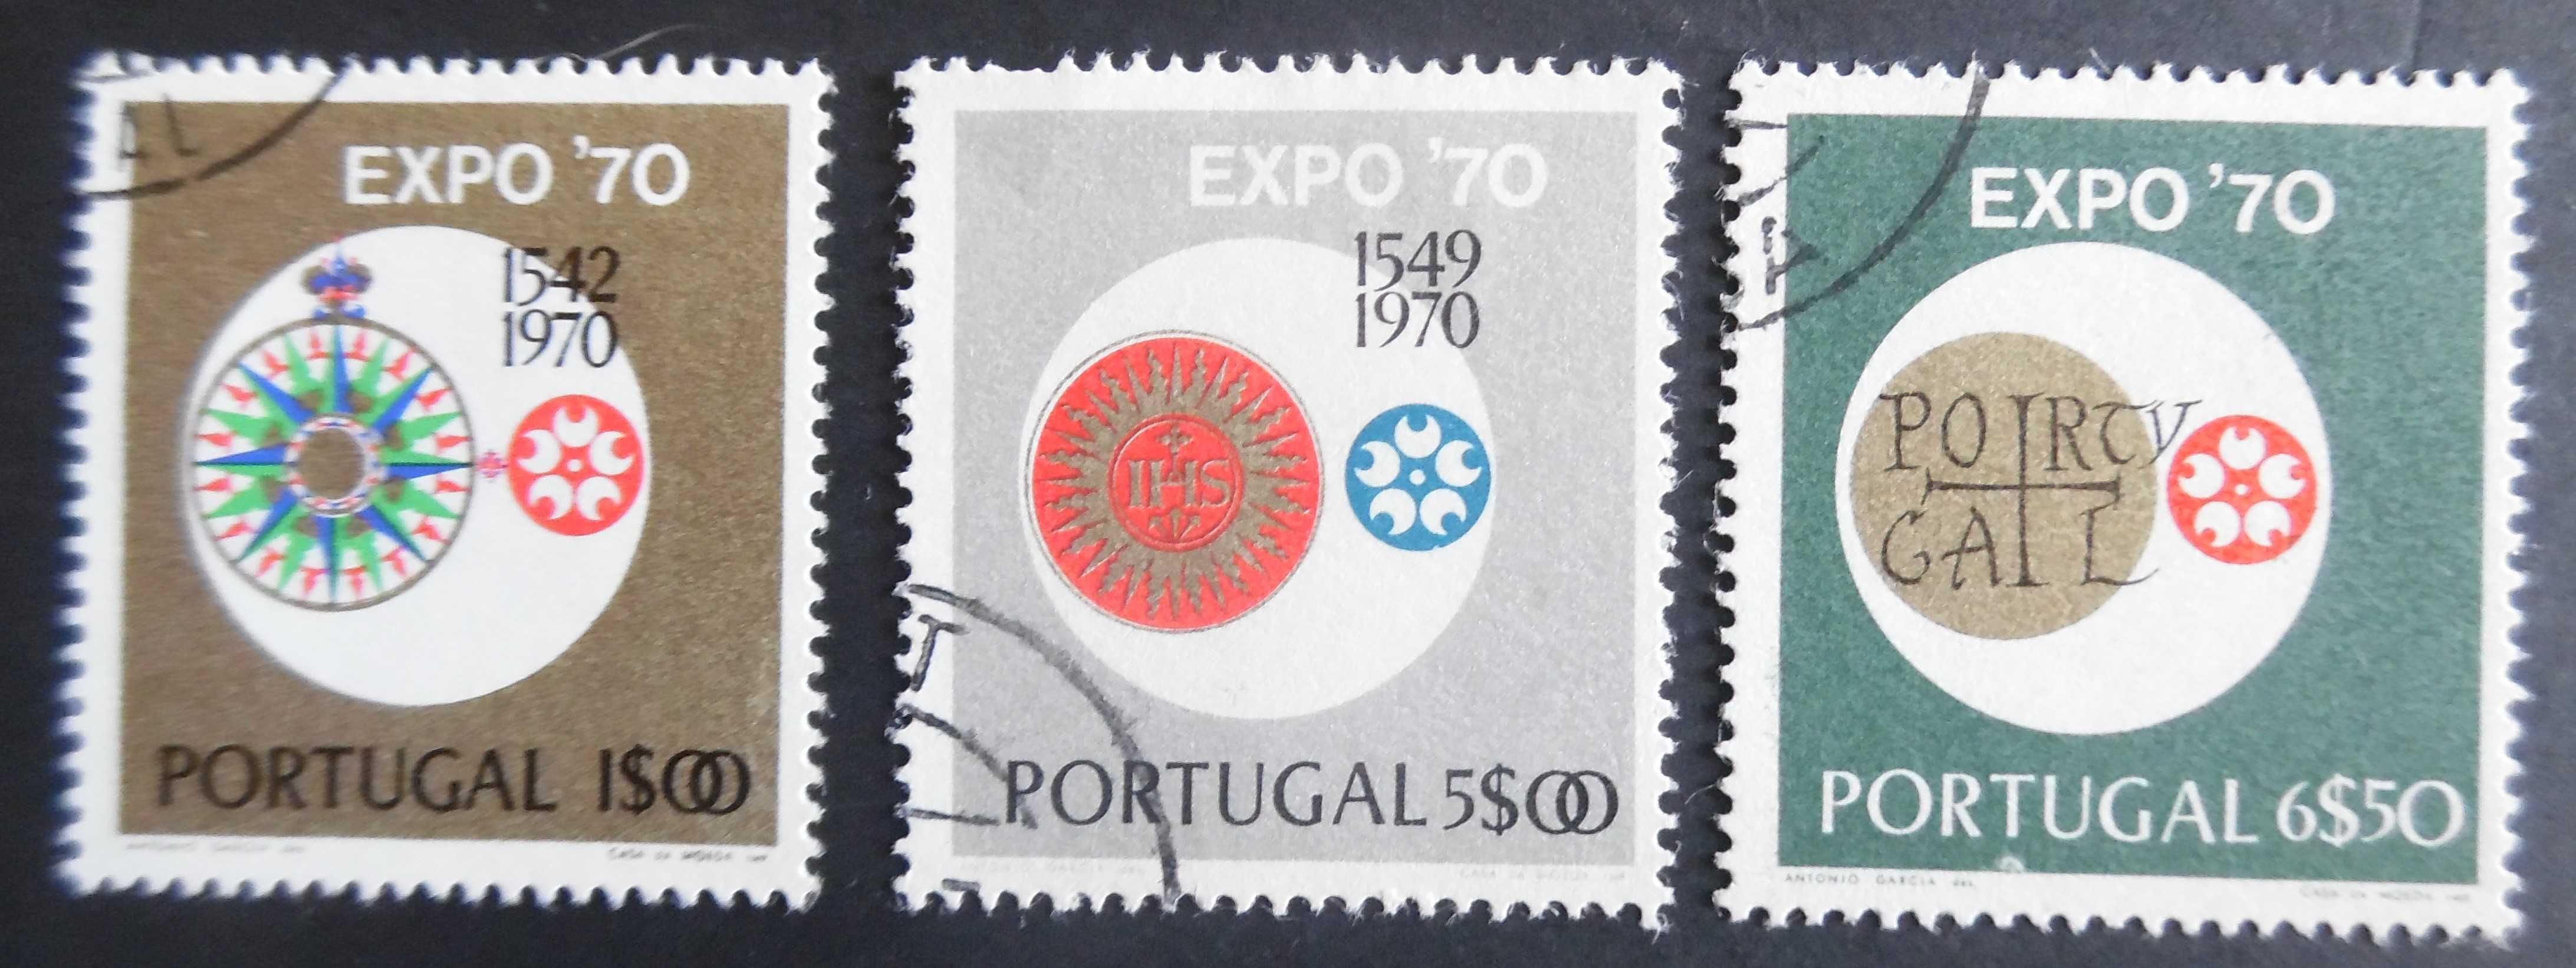 Selos Portugal 1970-Osaka expo 70